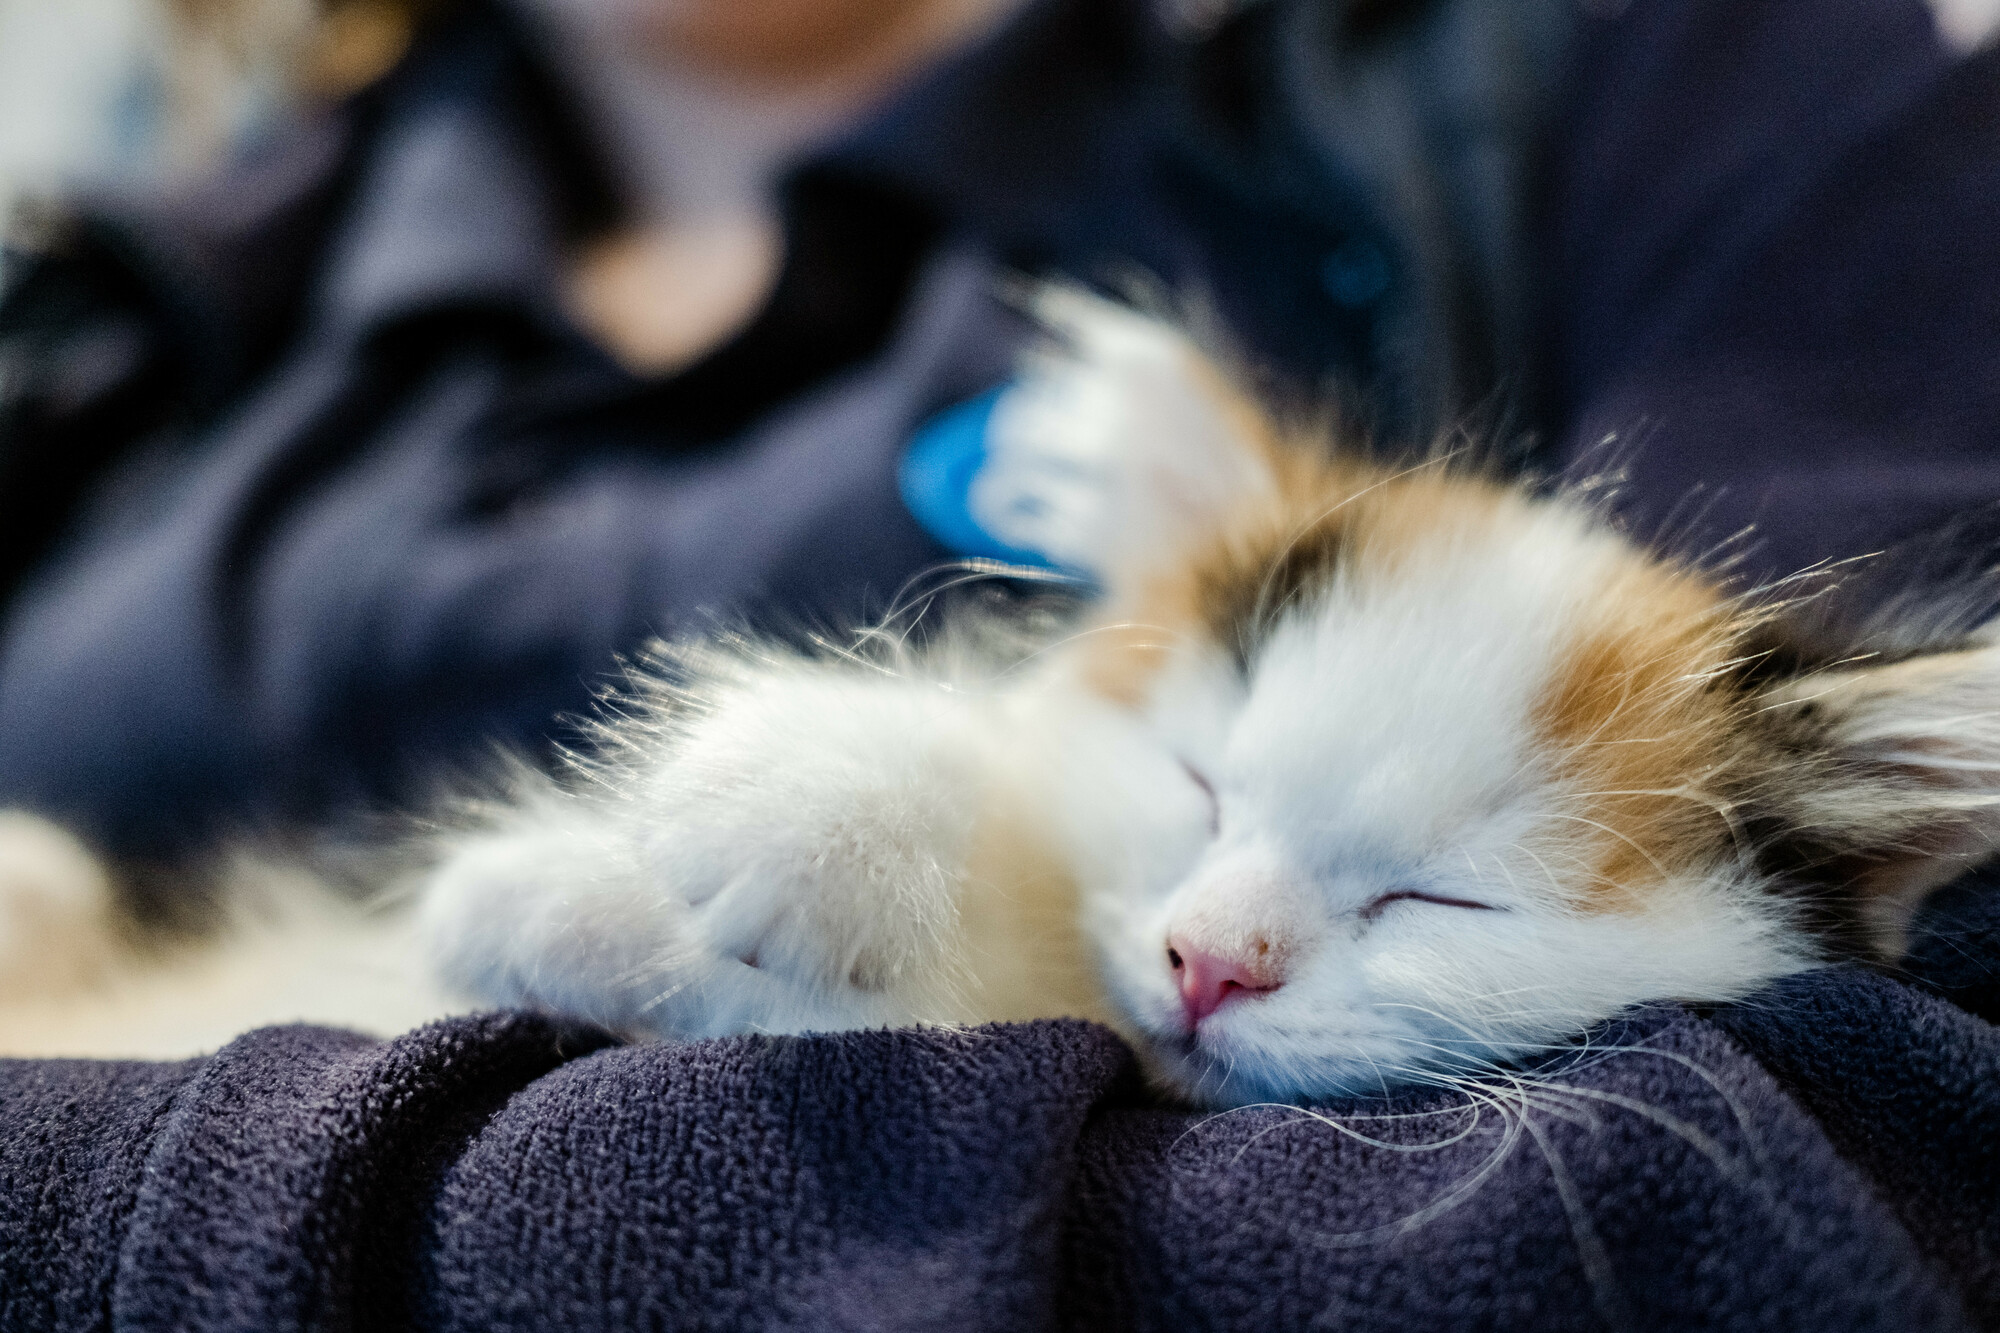 Kitten Widget sleeping in the arms of a Blue Cross team member